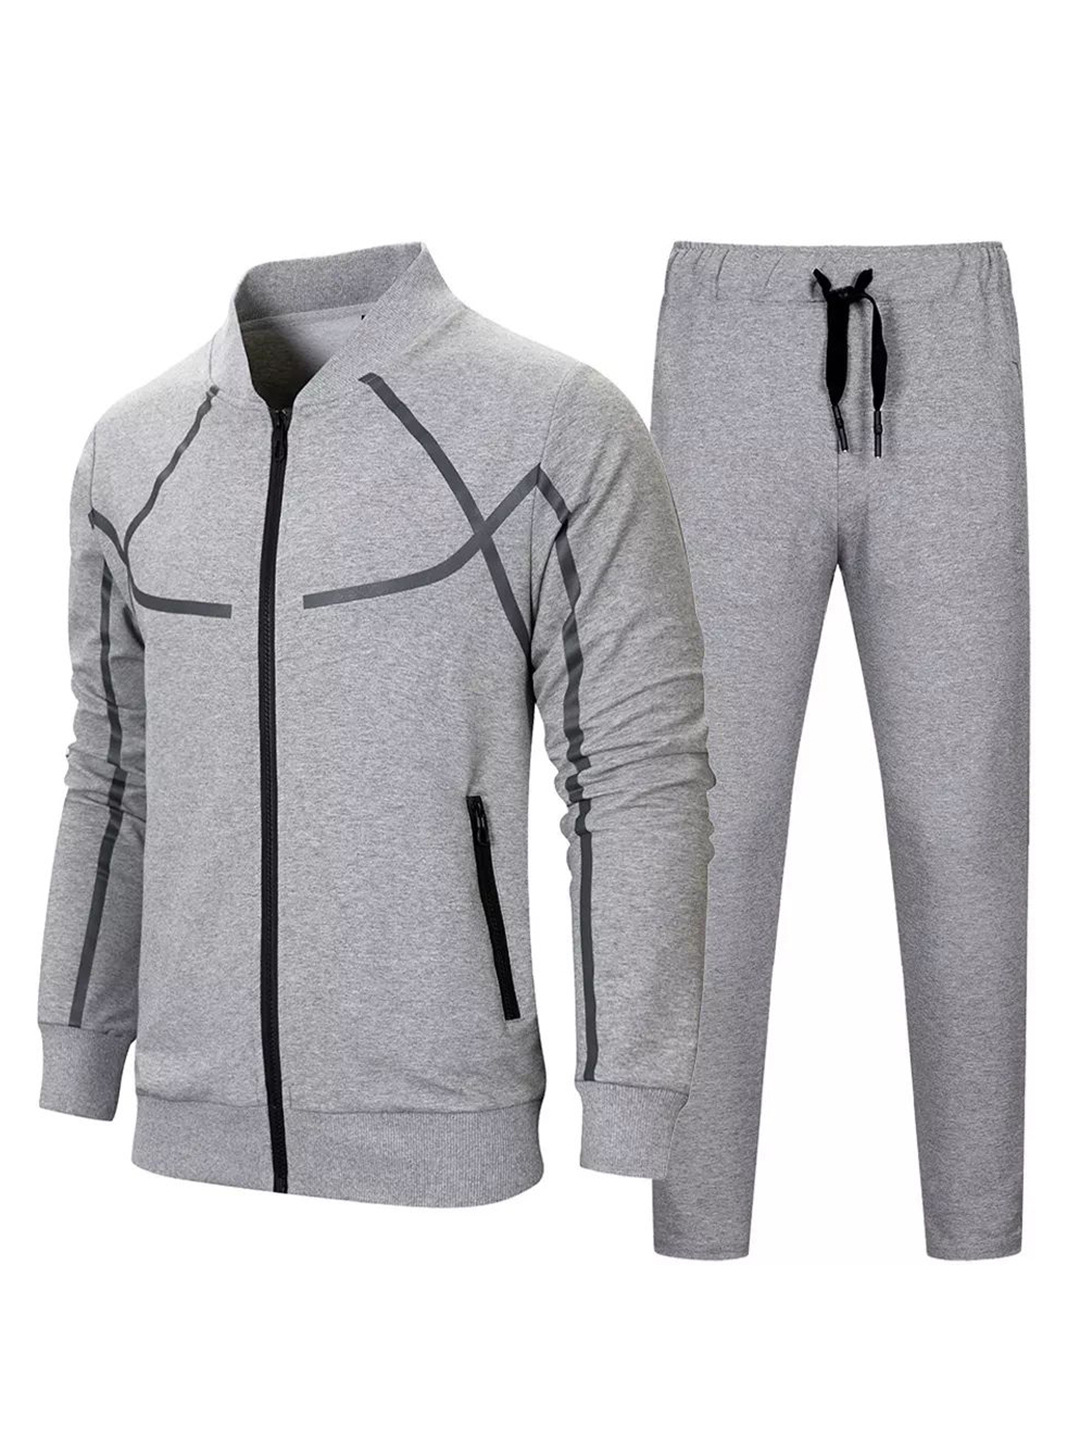 Men's Casual Full-Zip Running Jogging Athletic Suits